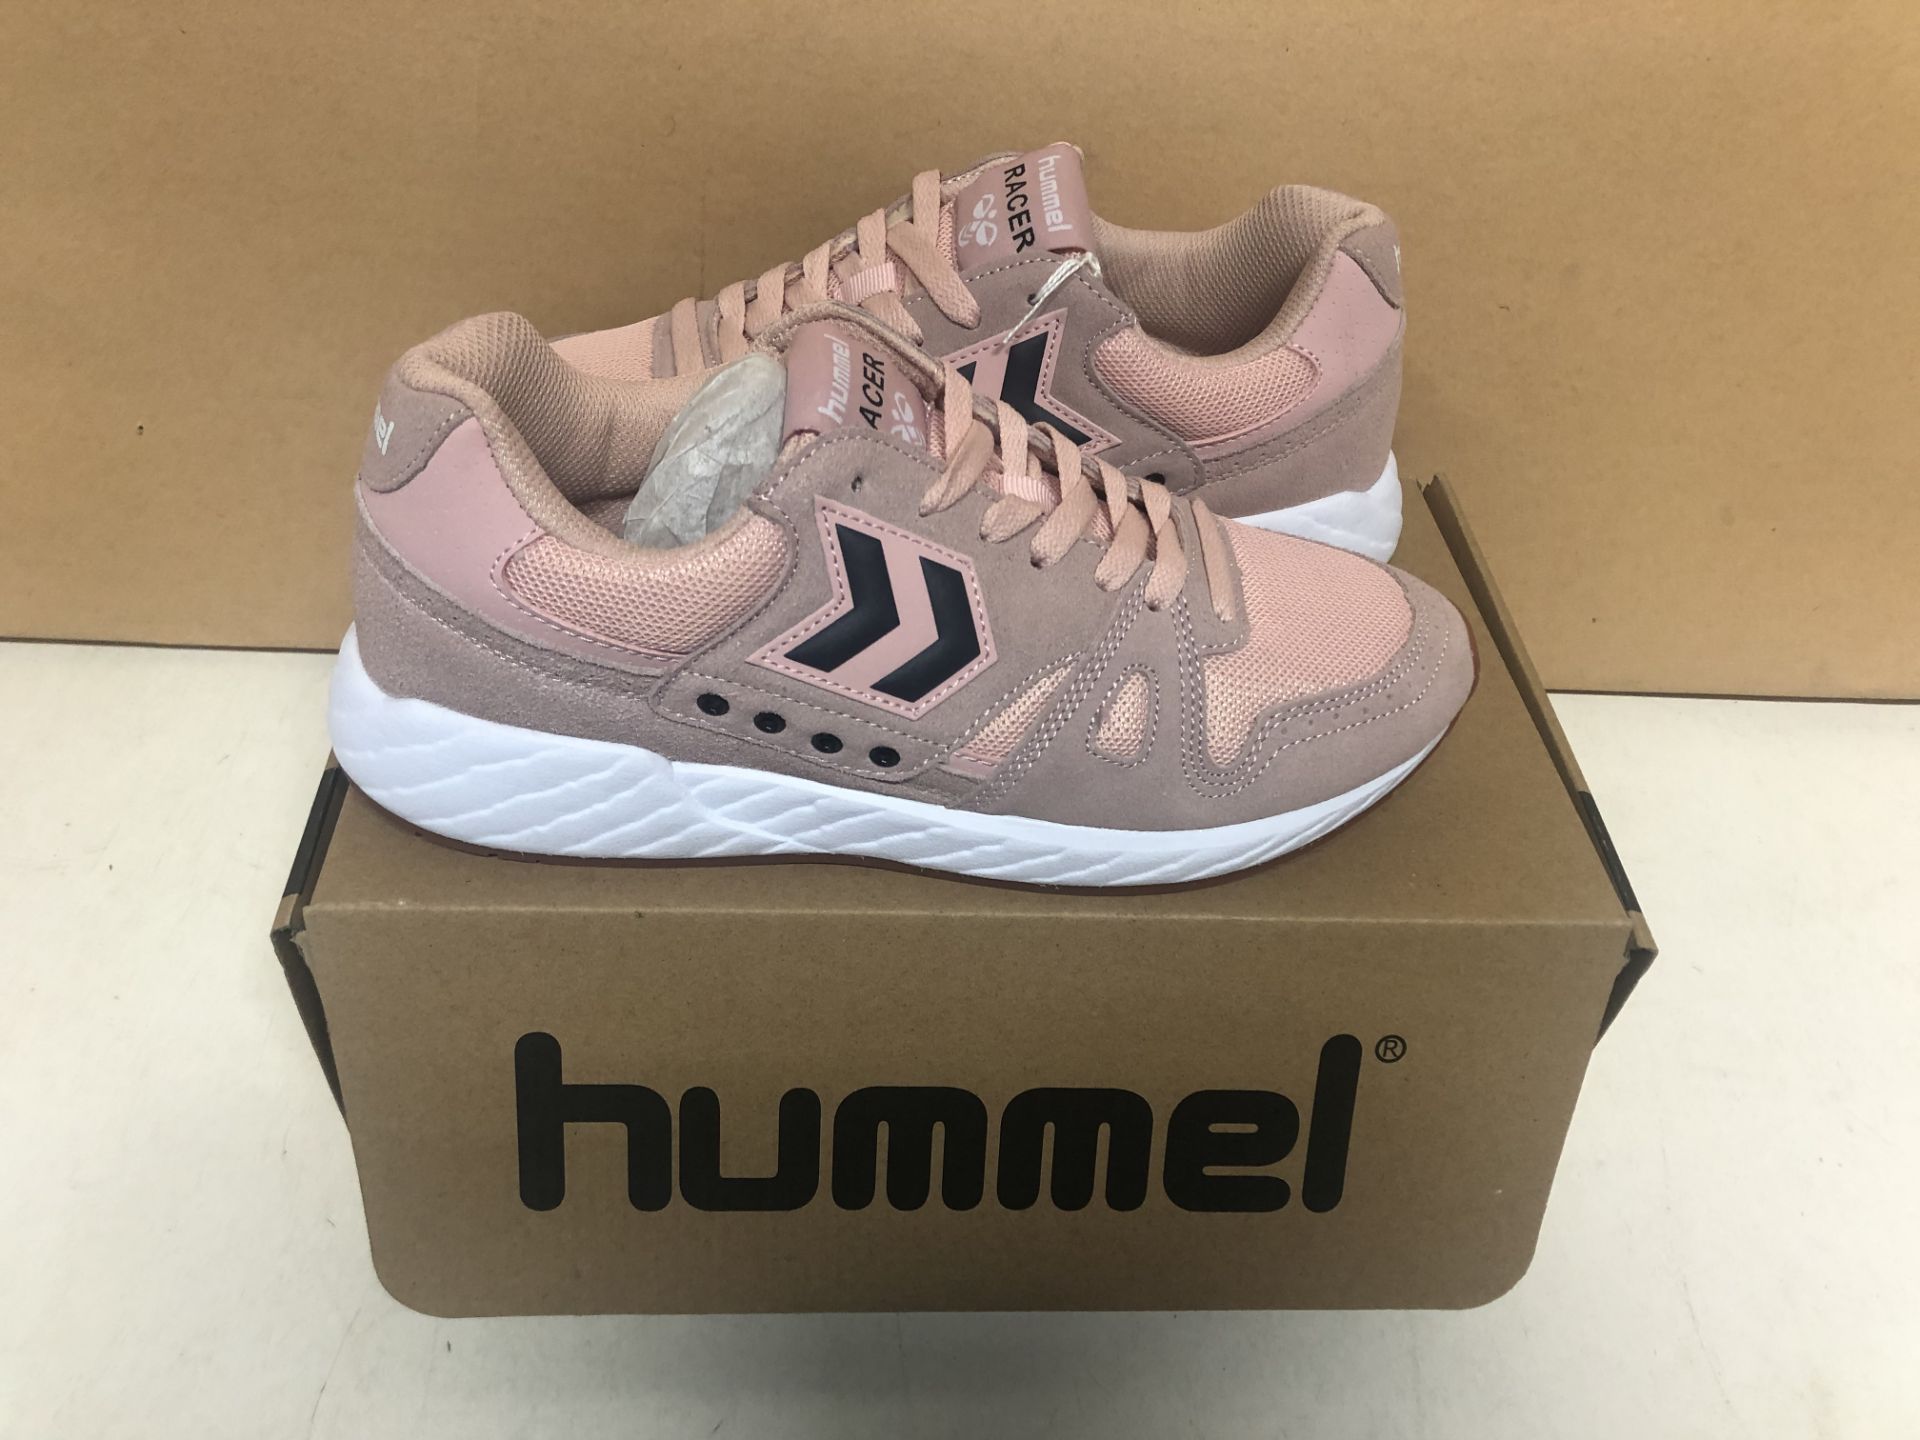 1 x Hummel Marathona Legend Men's Sneakers, rosa/anthrazit, 42 EU - 9 US 201883_3113 Size: 42 EU - - Image 6 of 6